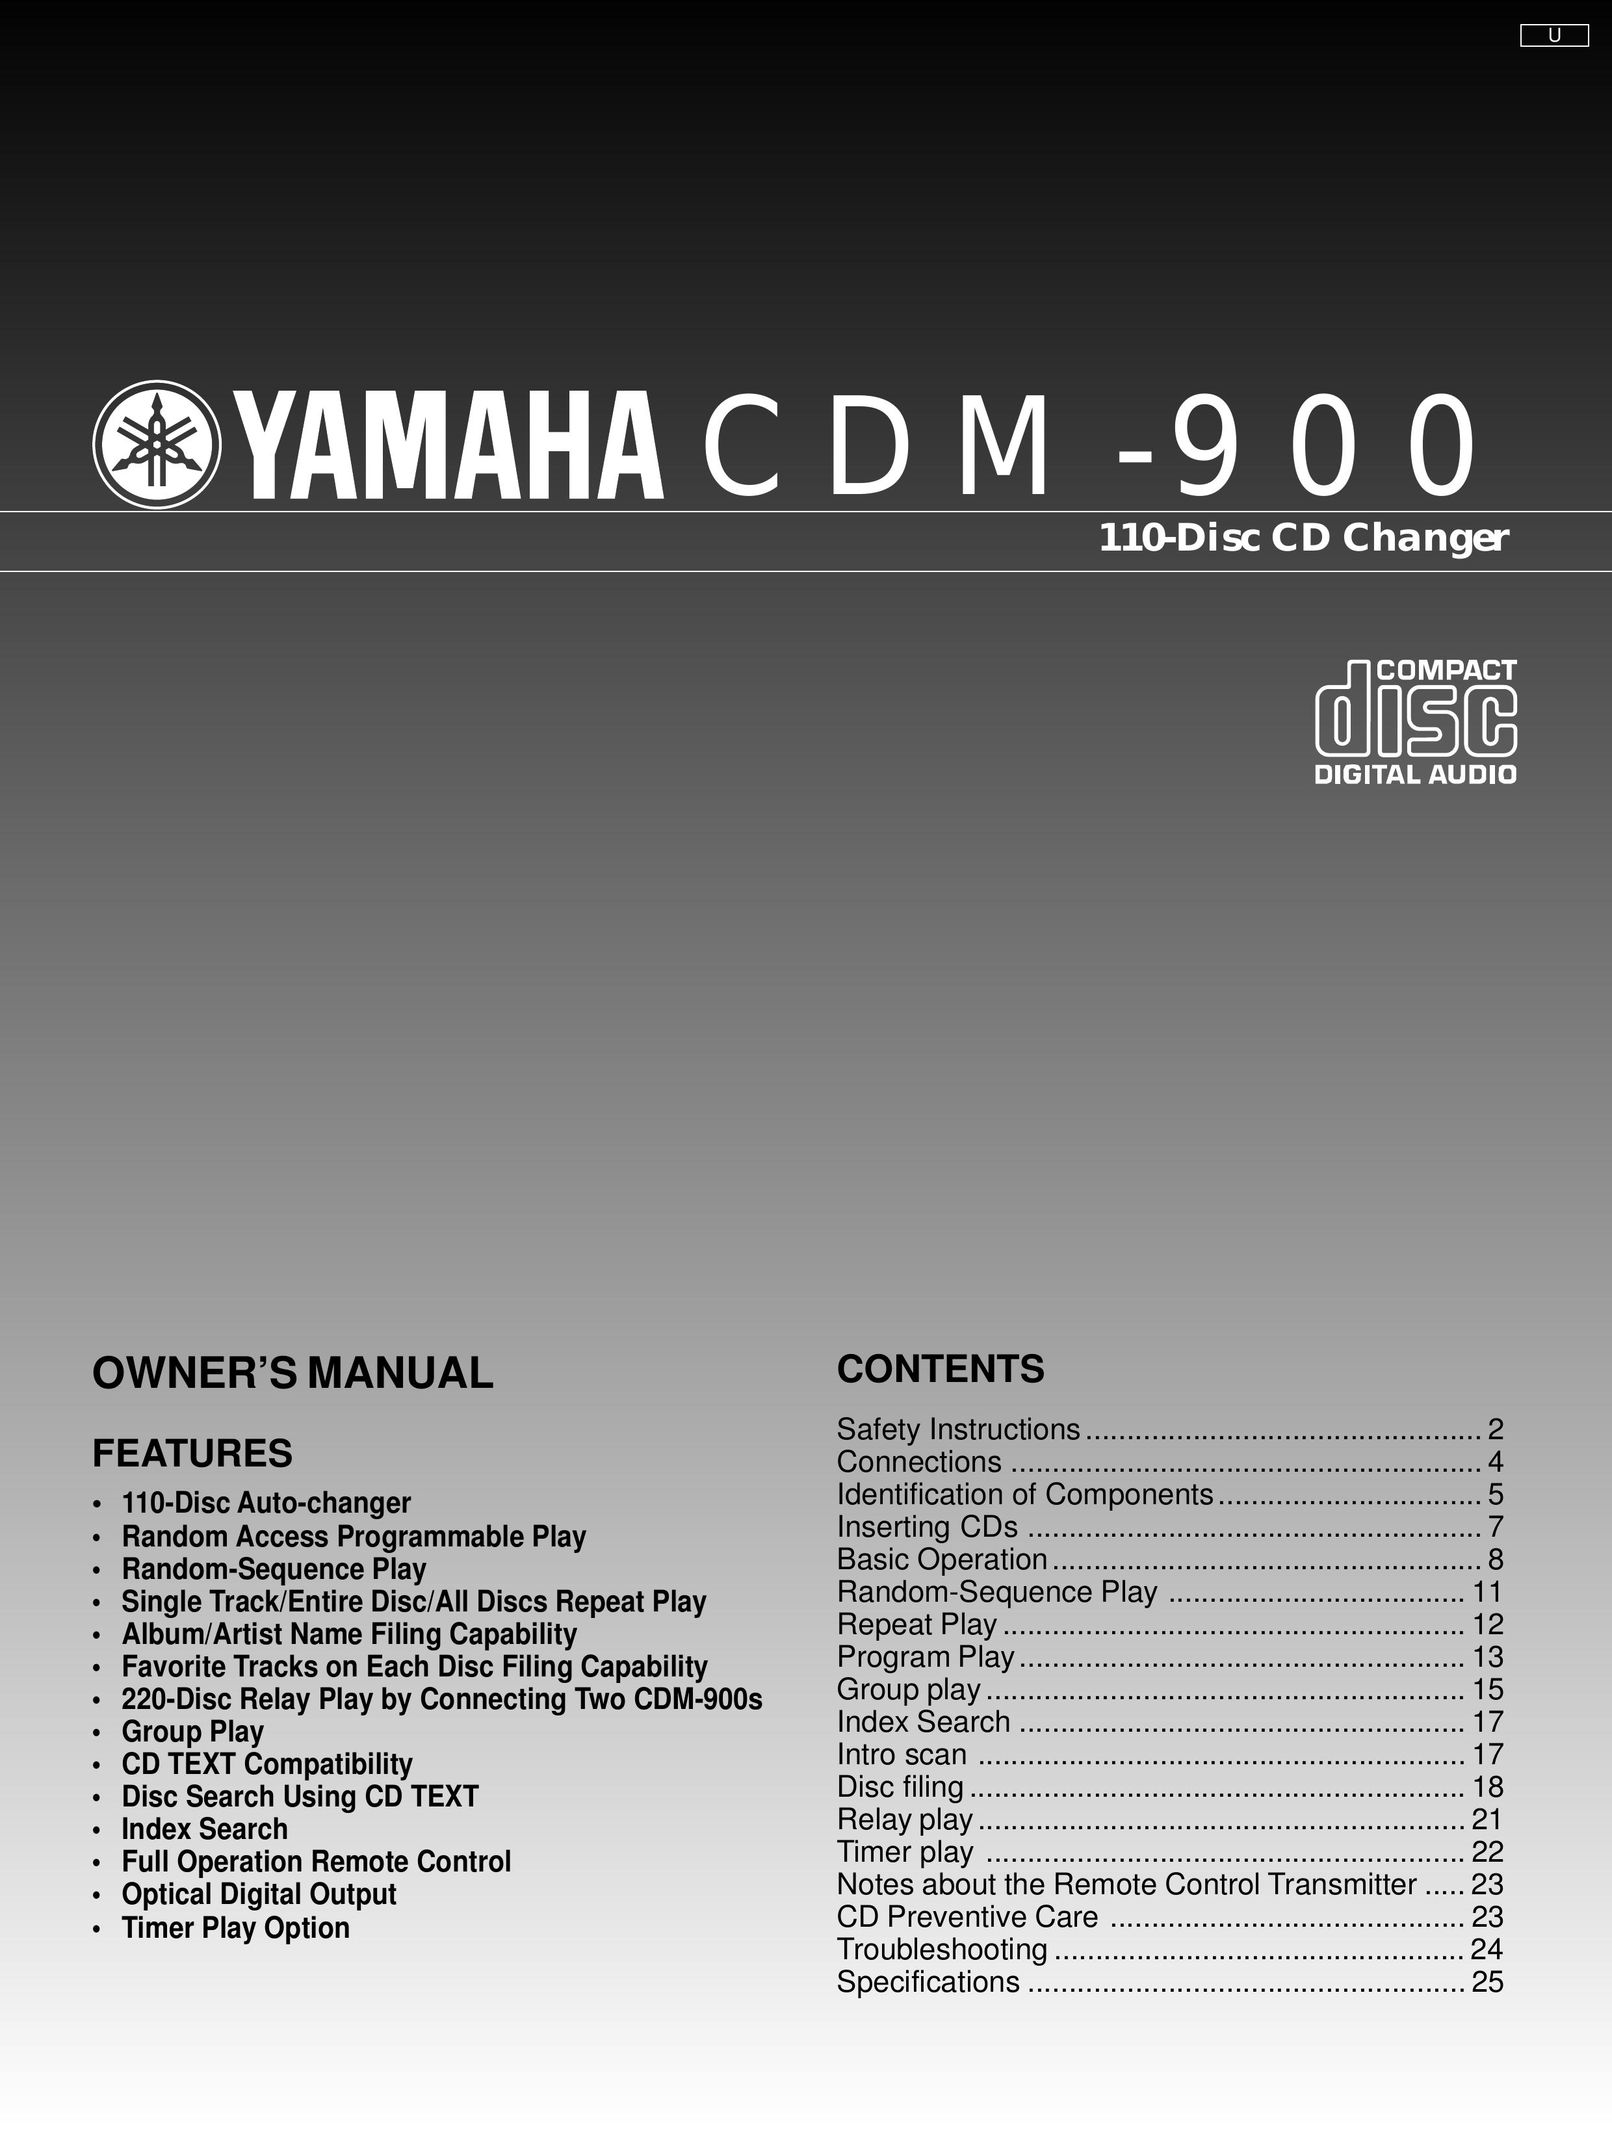 Yamaha CDM-900 Stereo System User Manual